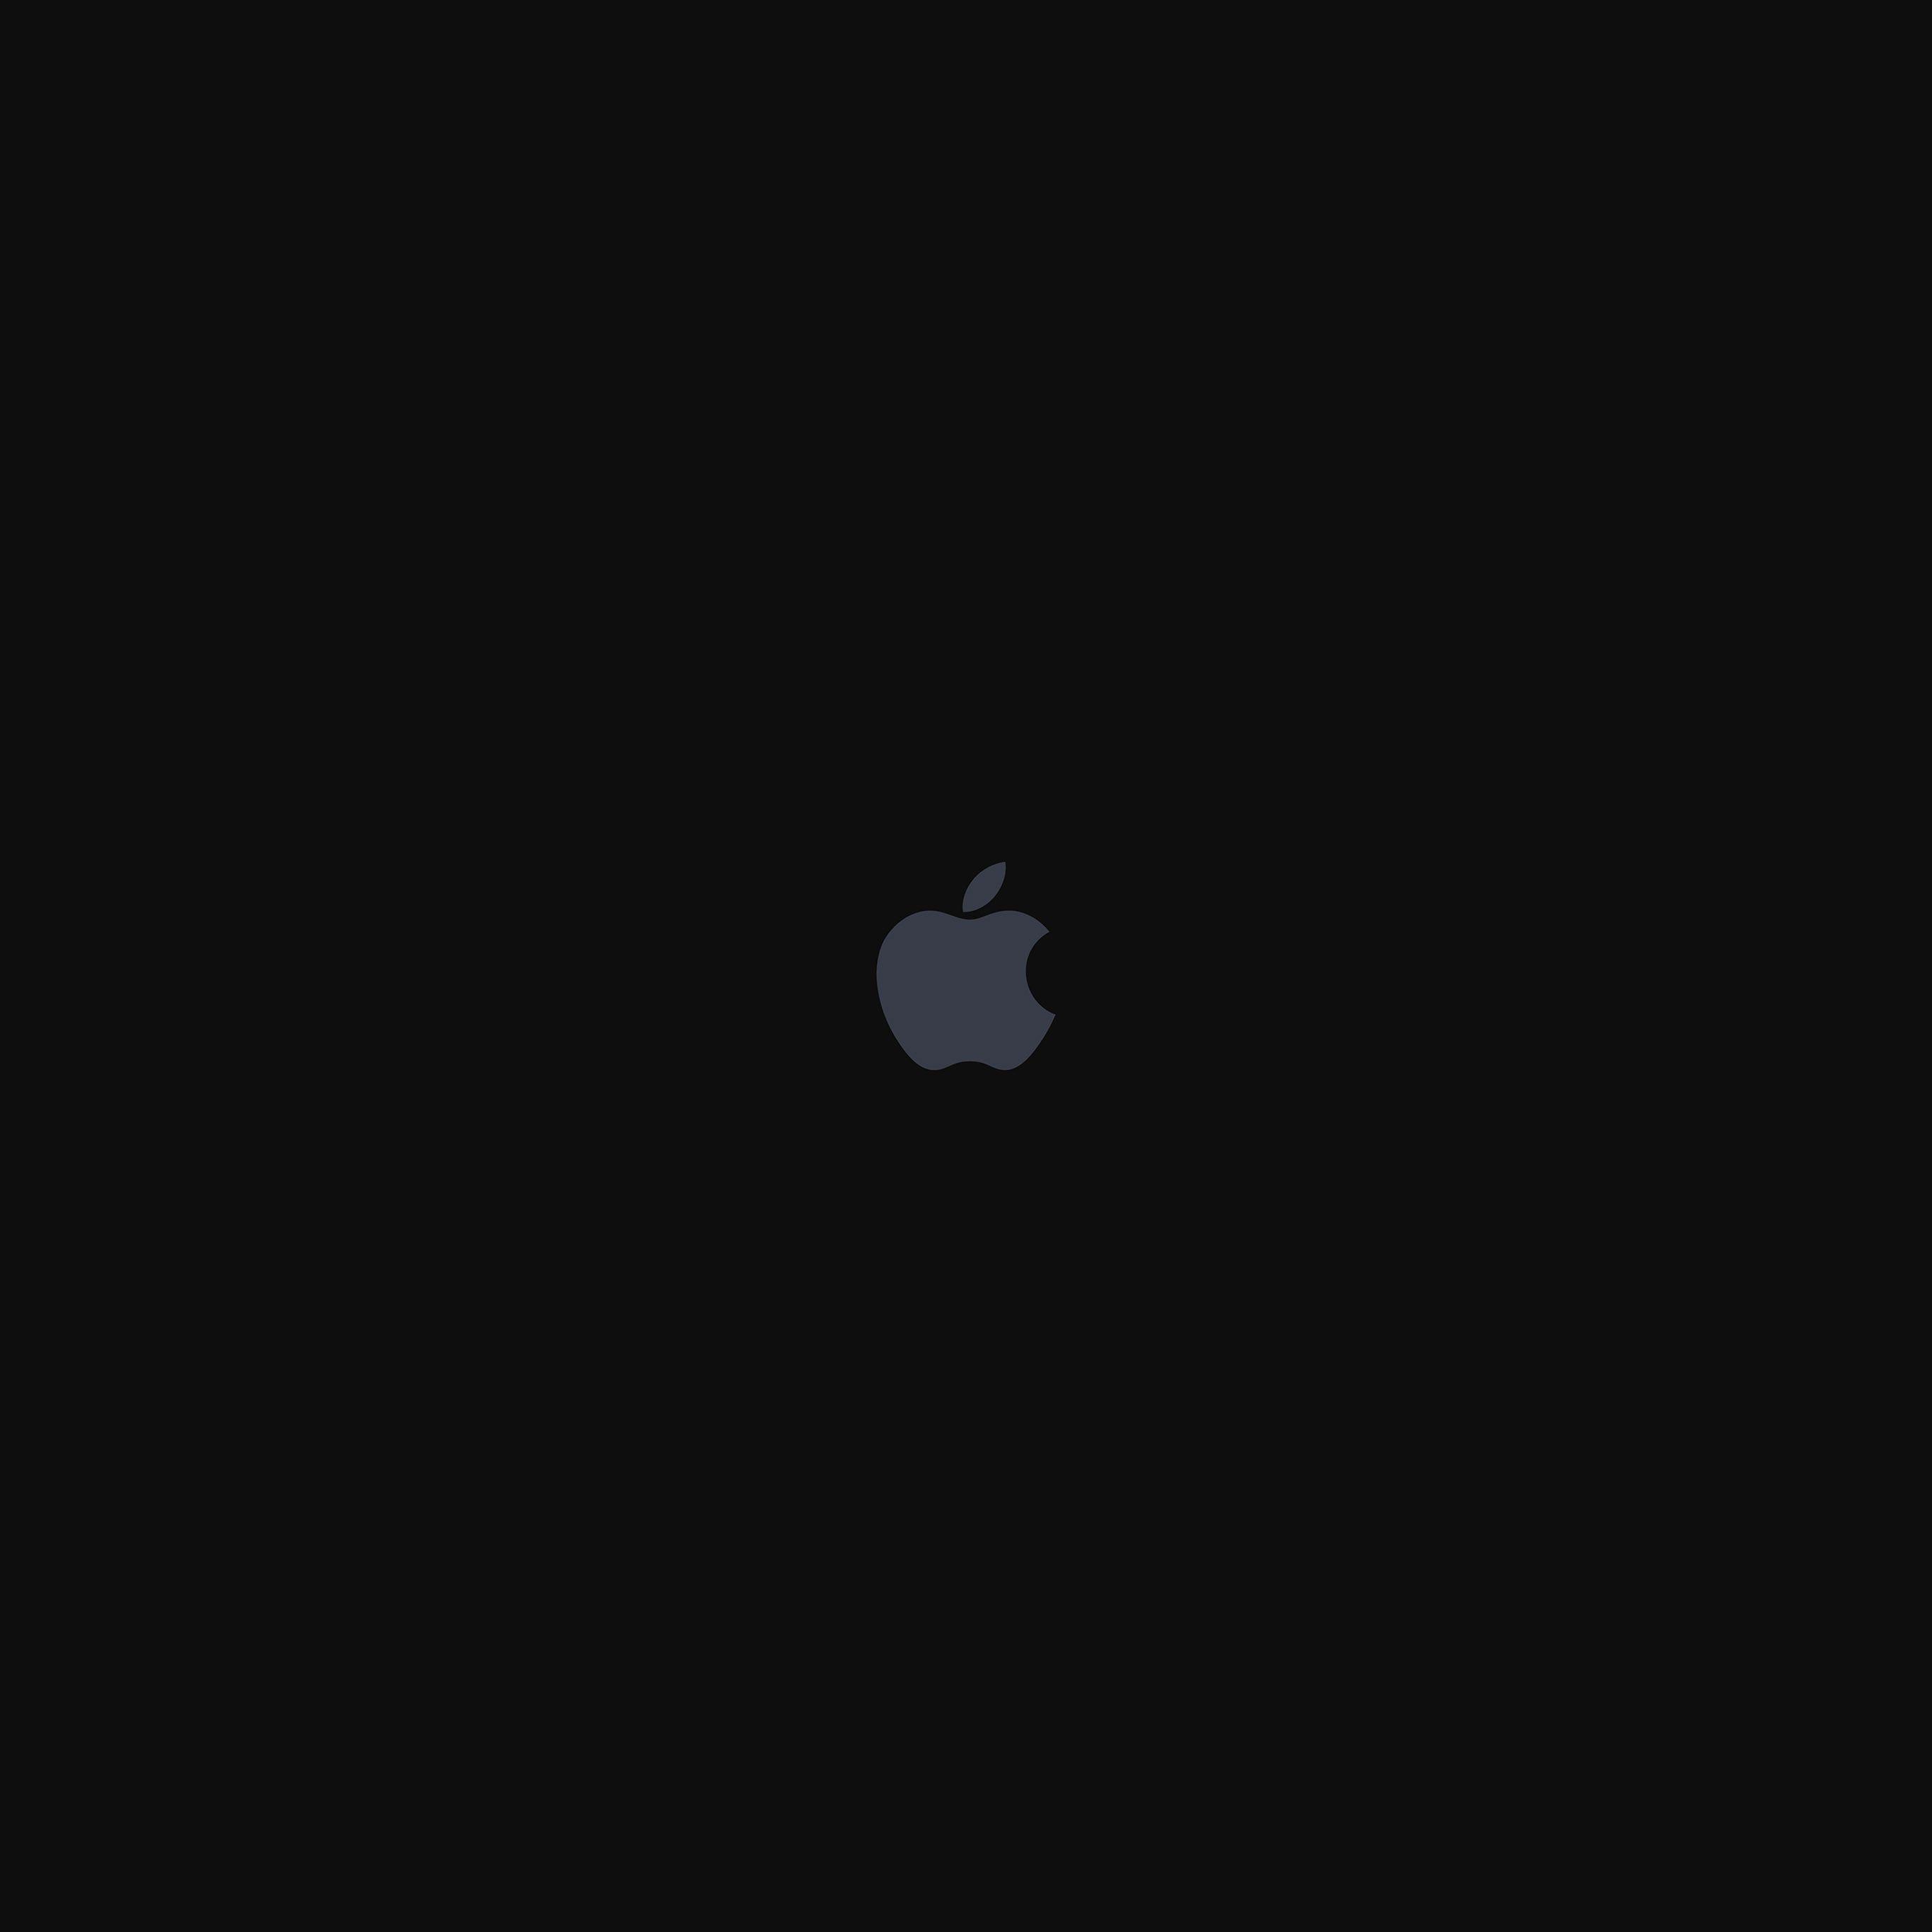 All Black Apple Logo - as68-iphone7-apple-logo-dark-art-illustration-wallpaper